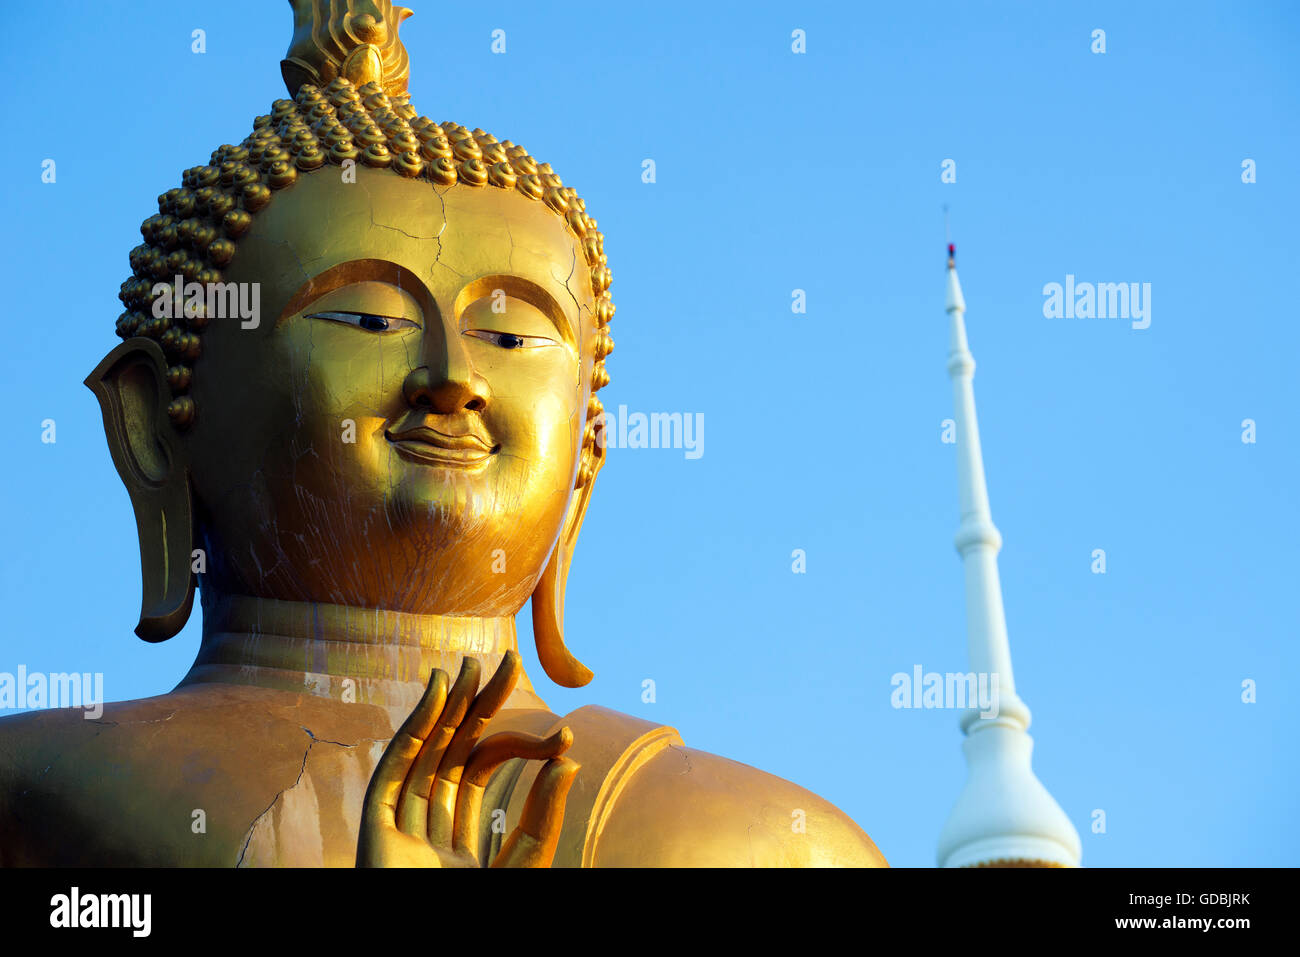 Giant buddha statue, Wat Khao Lad temple, Hua Hin, Thailand. Stock Photo